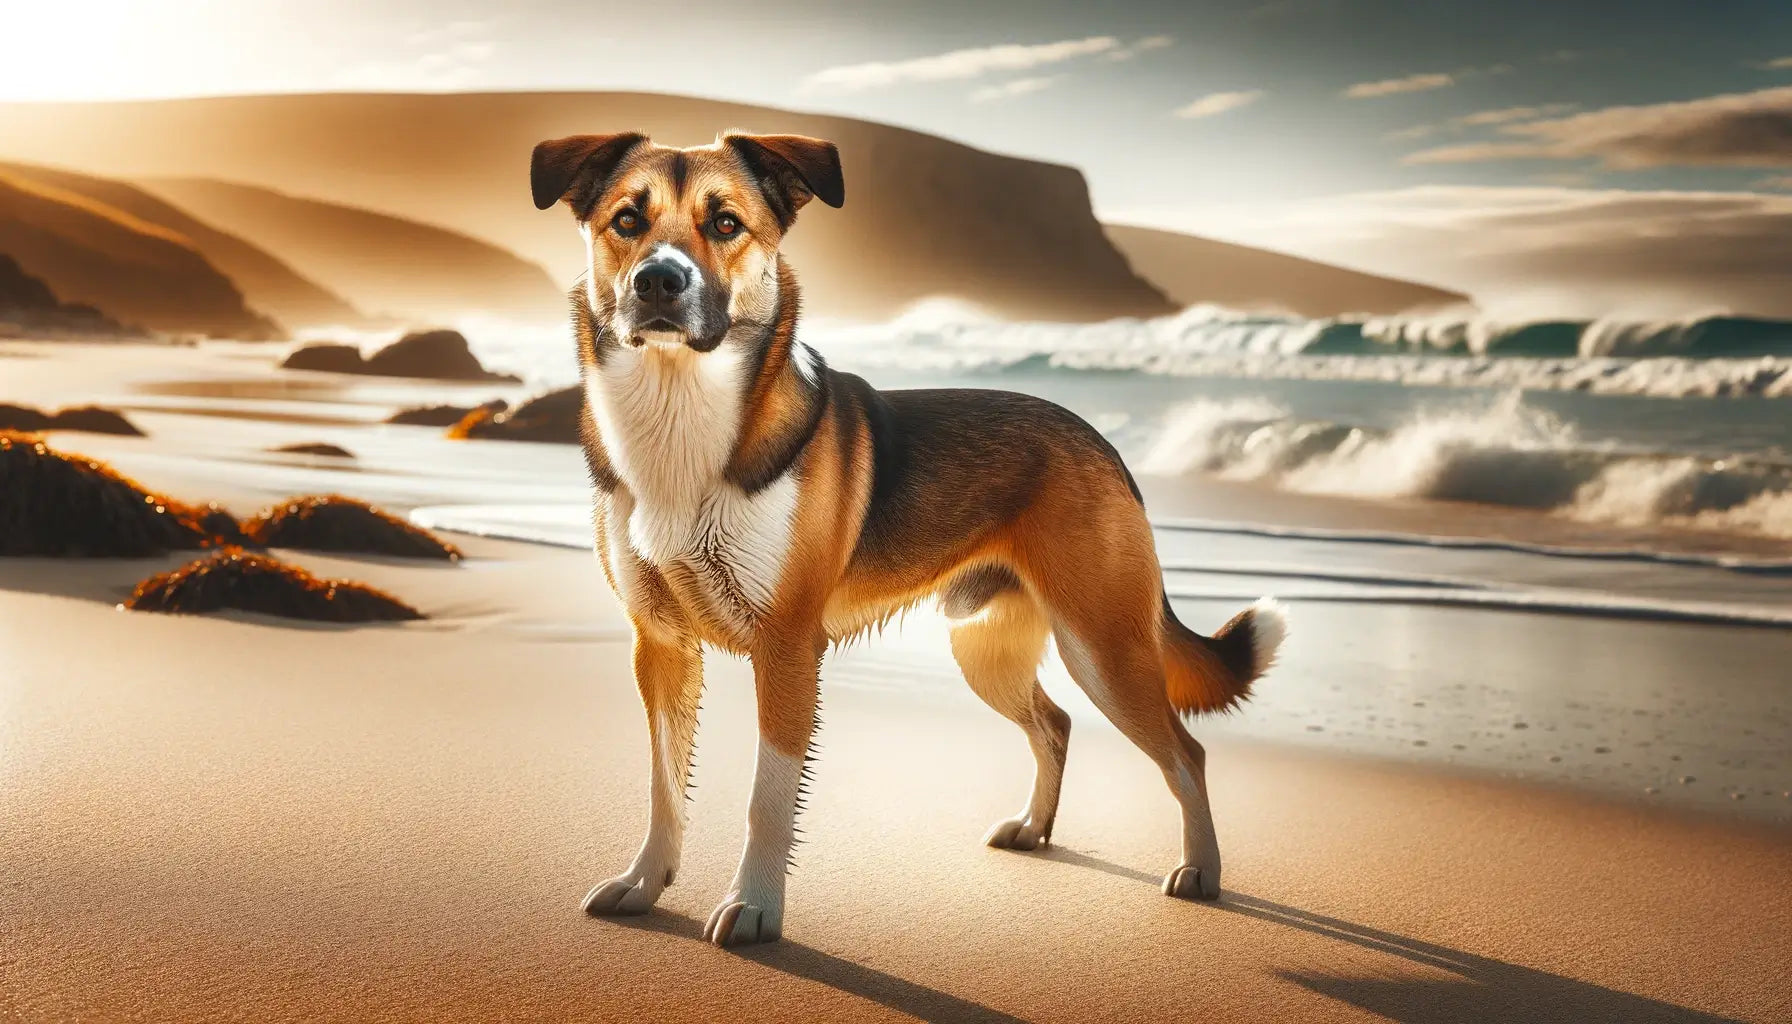 Potcake Dog on a beach with the sea as a backdrop.